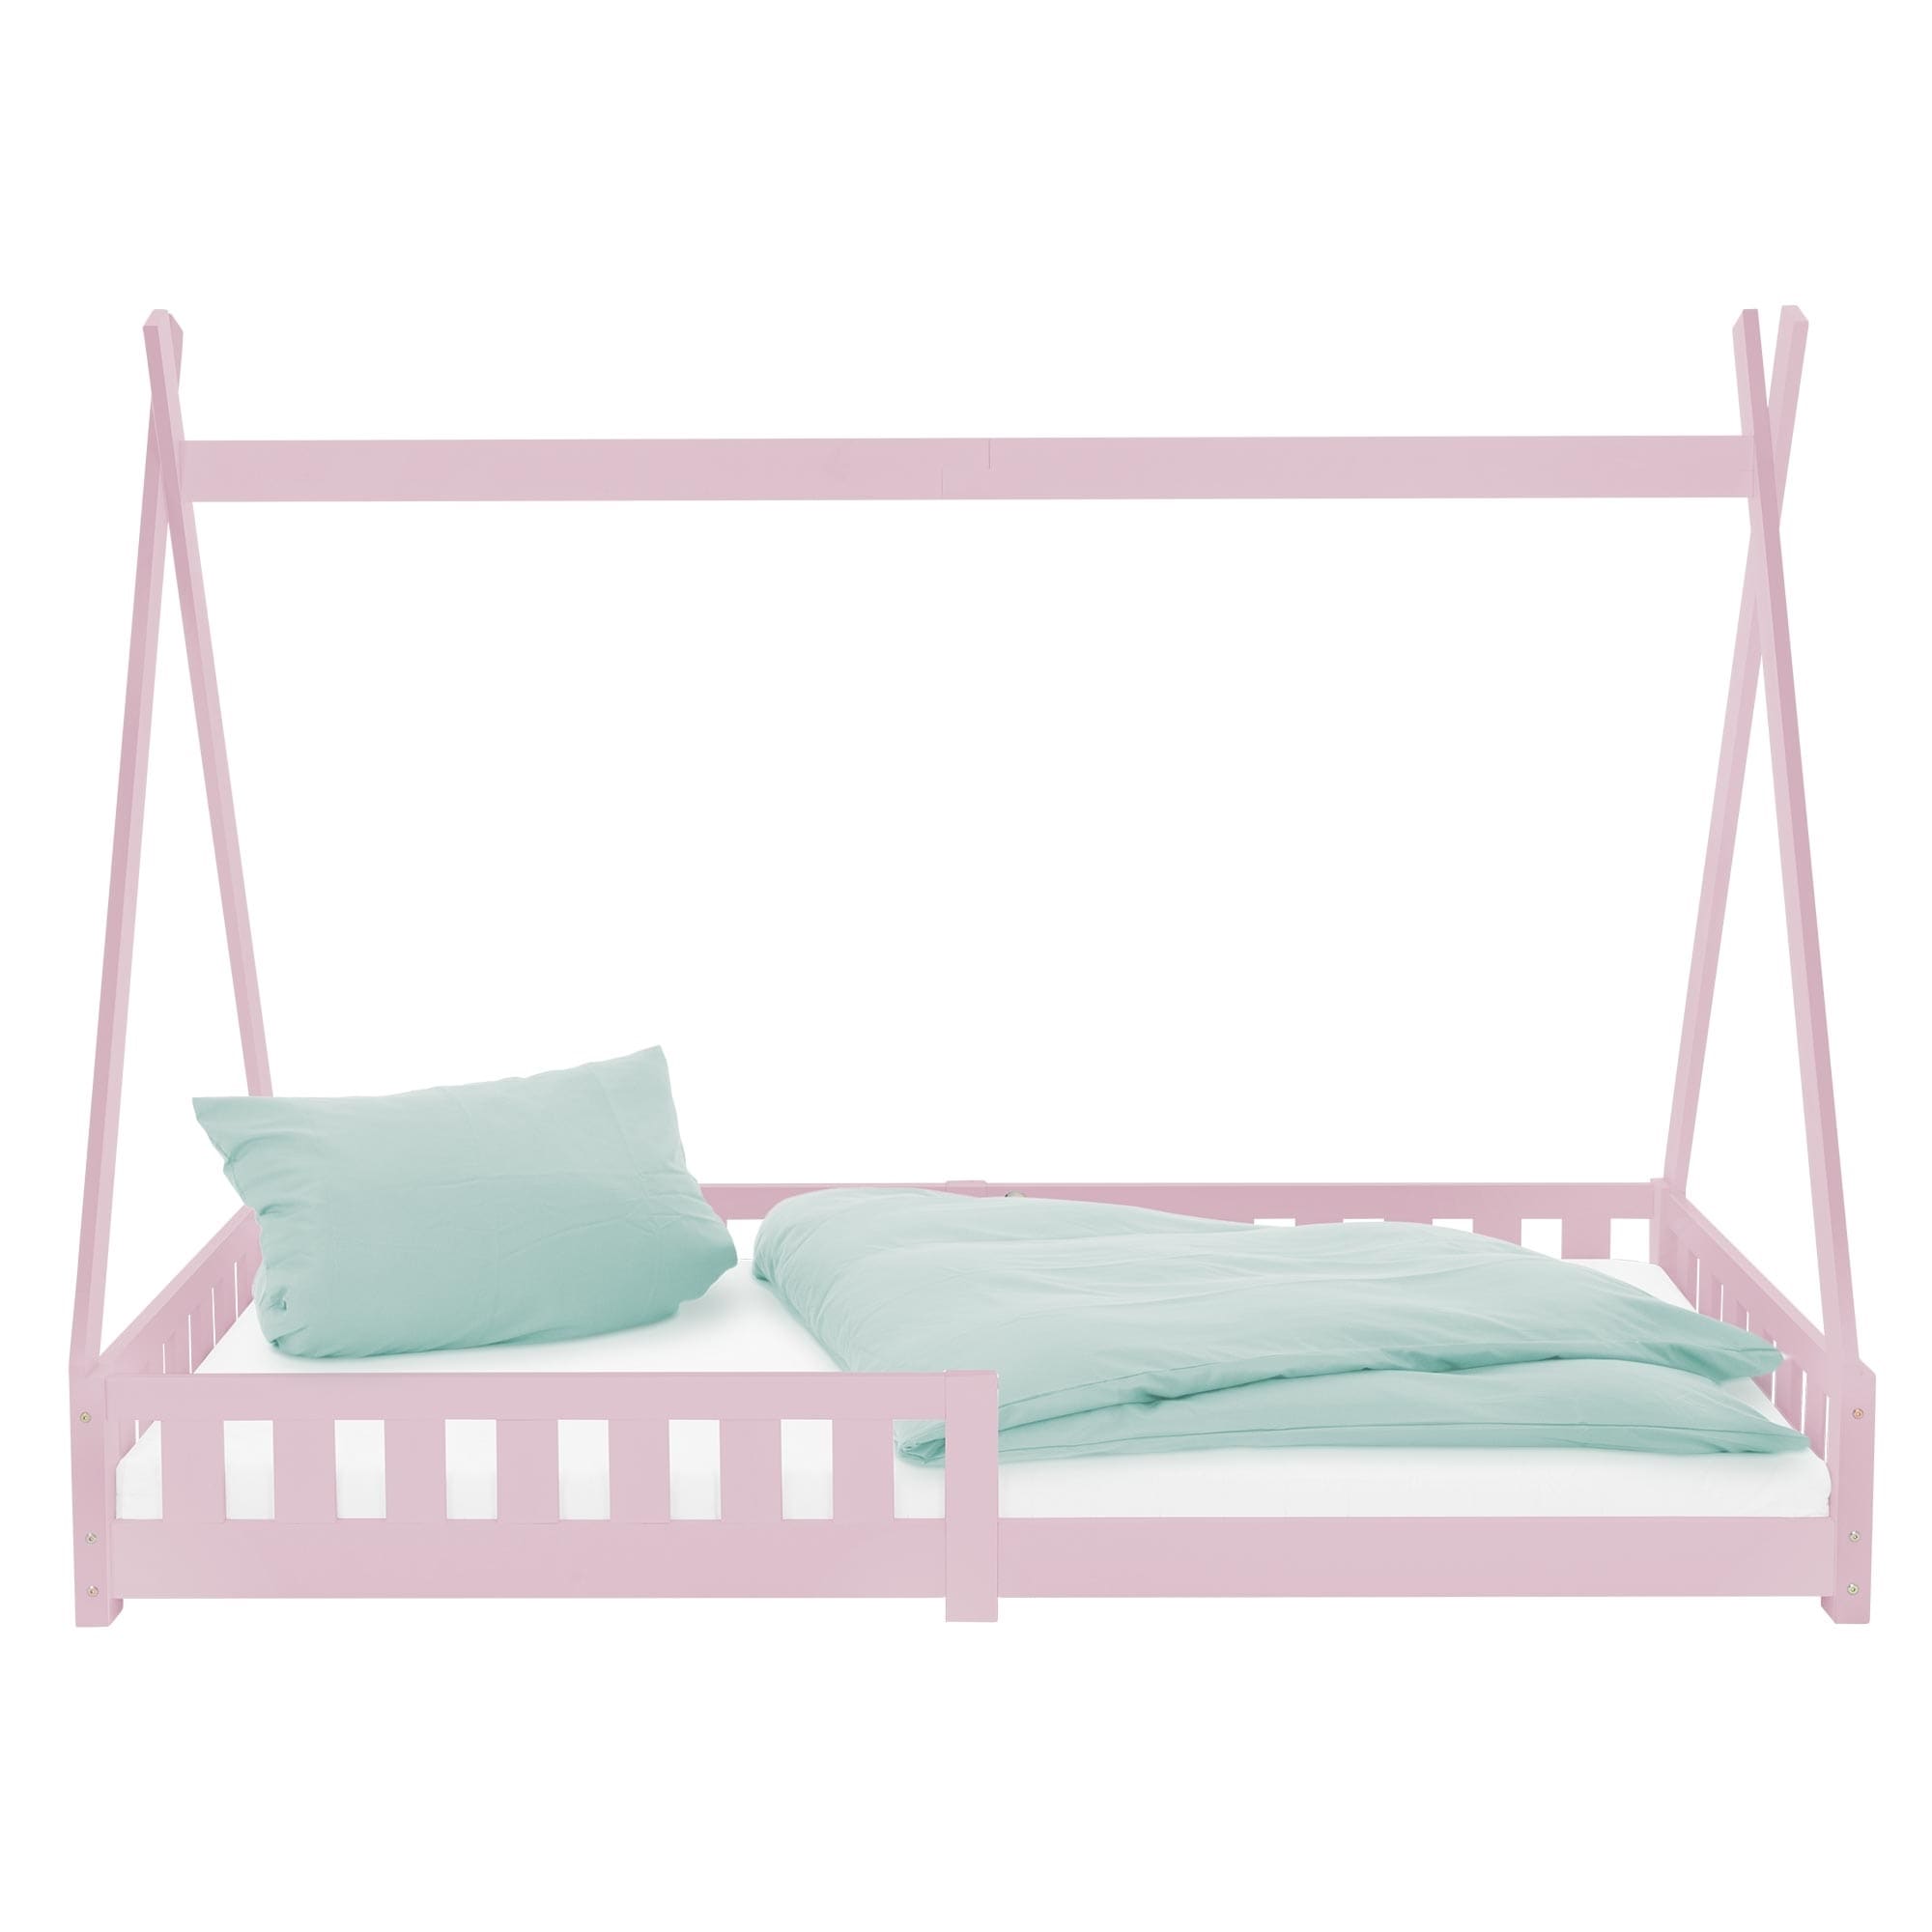 Barnsäng Tipi Pink Fall-Out Protection Trä säng hus säng Pine 200x90cm -  Elgiganten